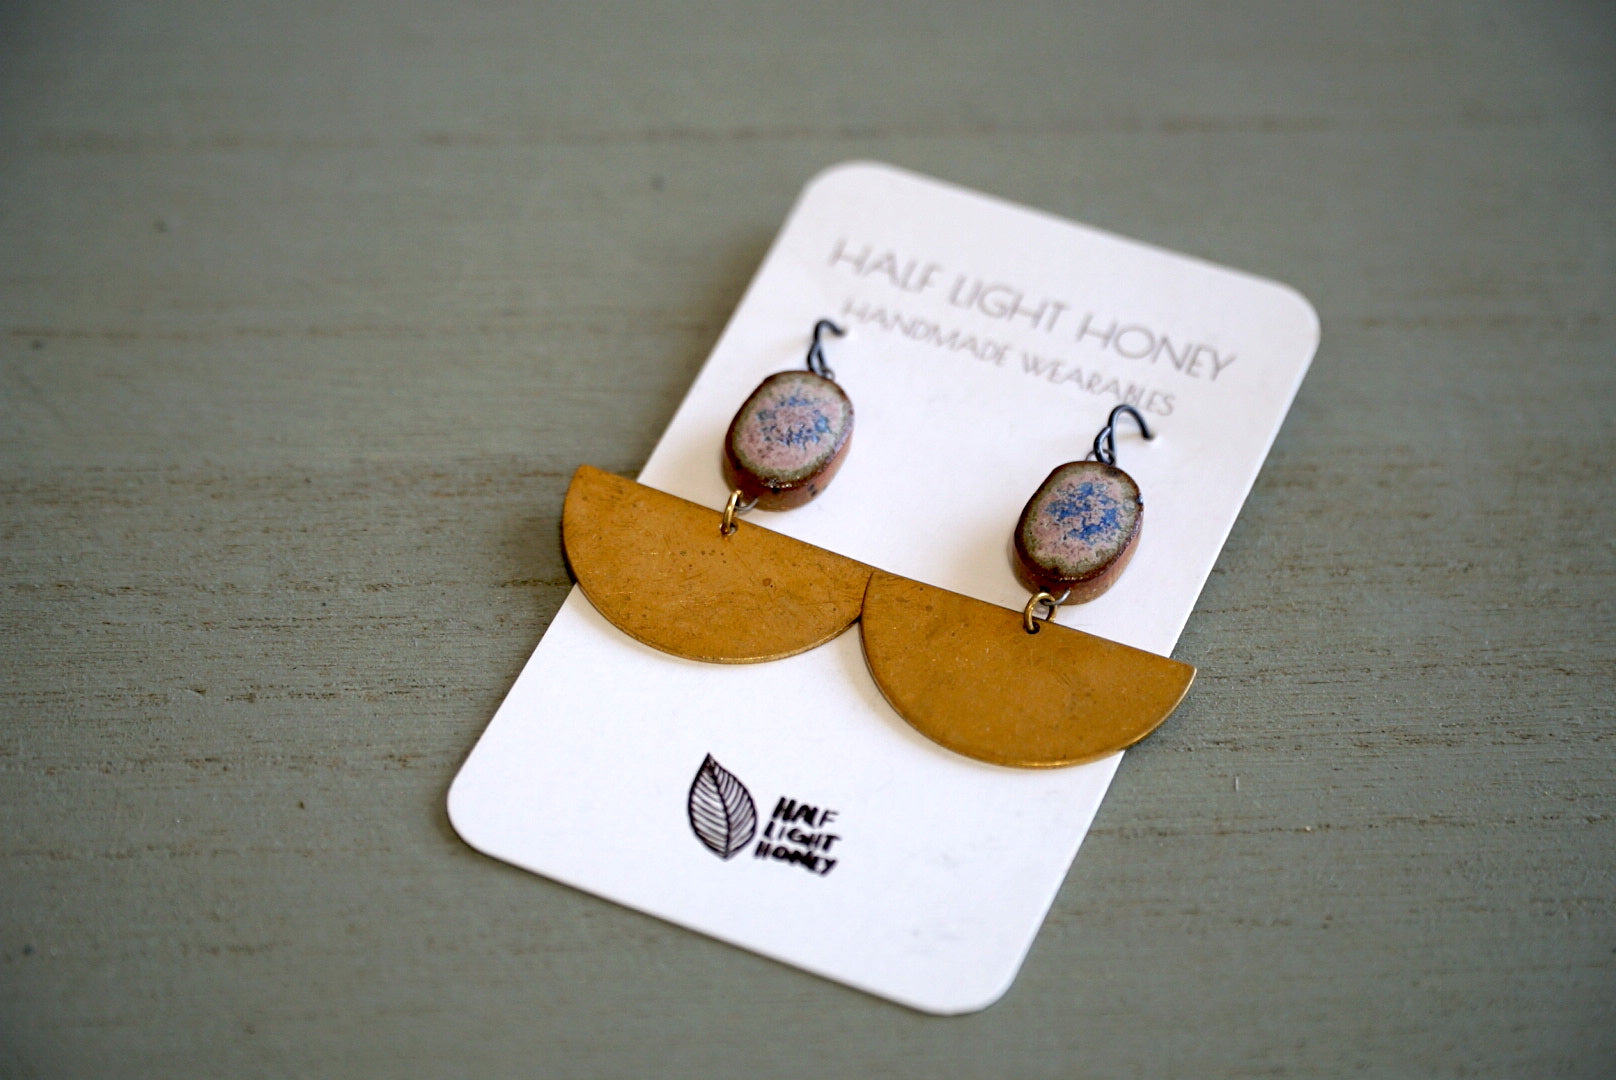 Mixed Media Earrings - Glazed Stoneware Beads - Niobium Earwire - Brass Component - Jewelry - Statement Earring - Boho - Festival Fashion